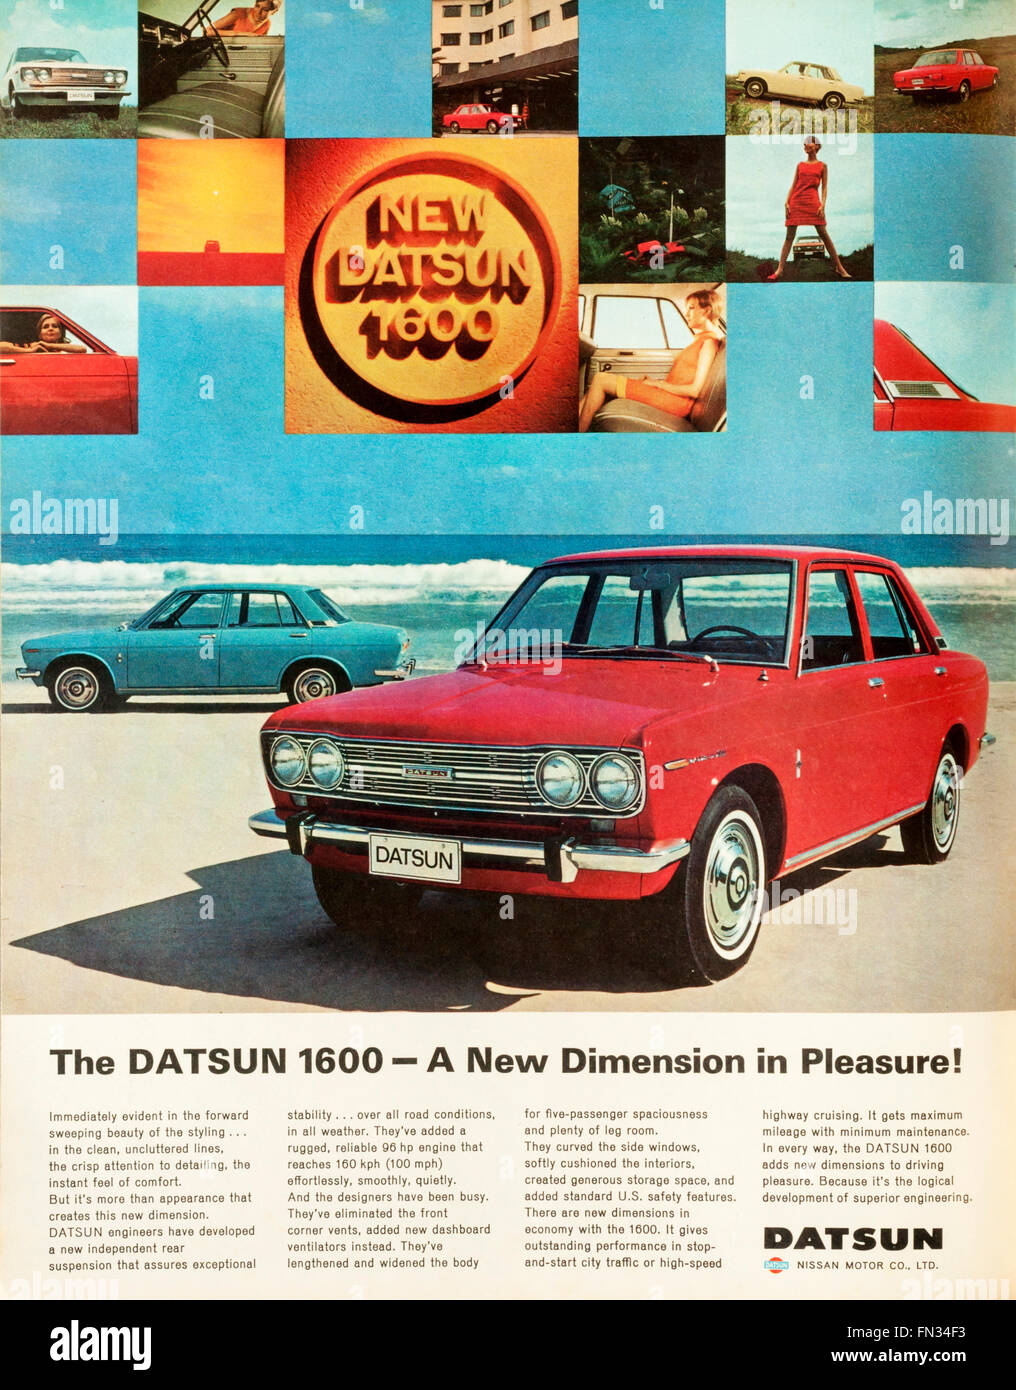 1960s magazine advertisement advertising the Datsun 1600 car. Stock Photo